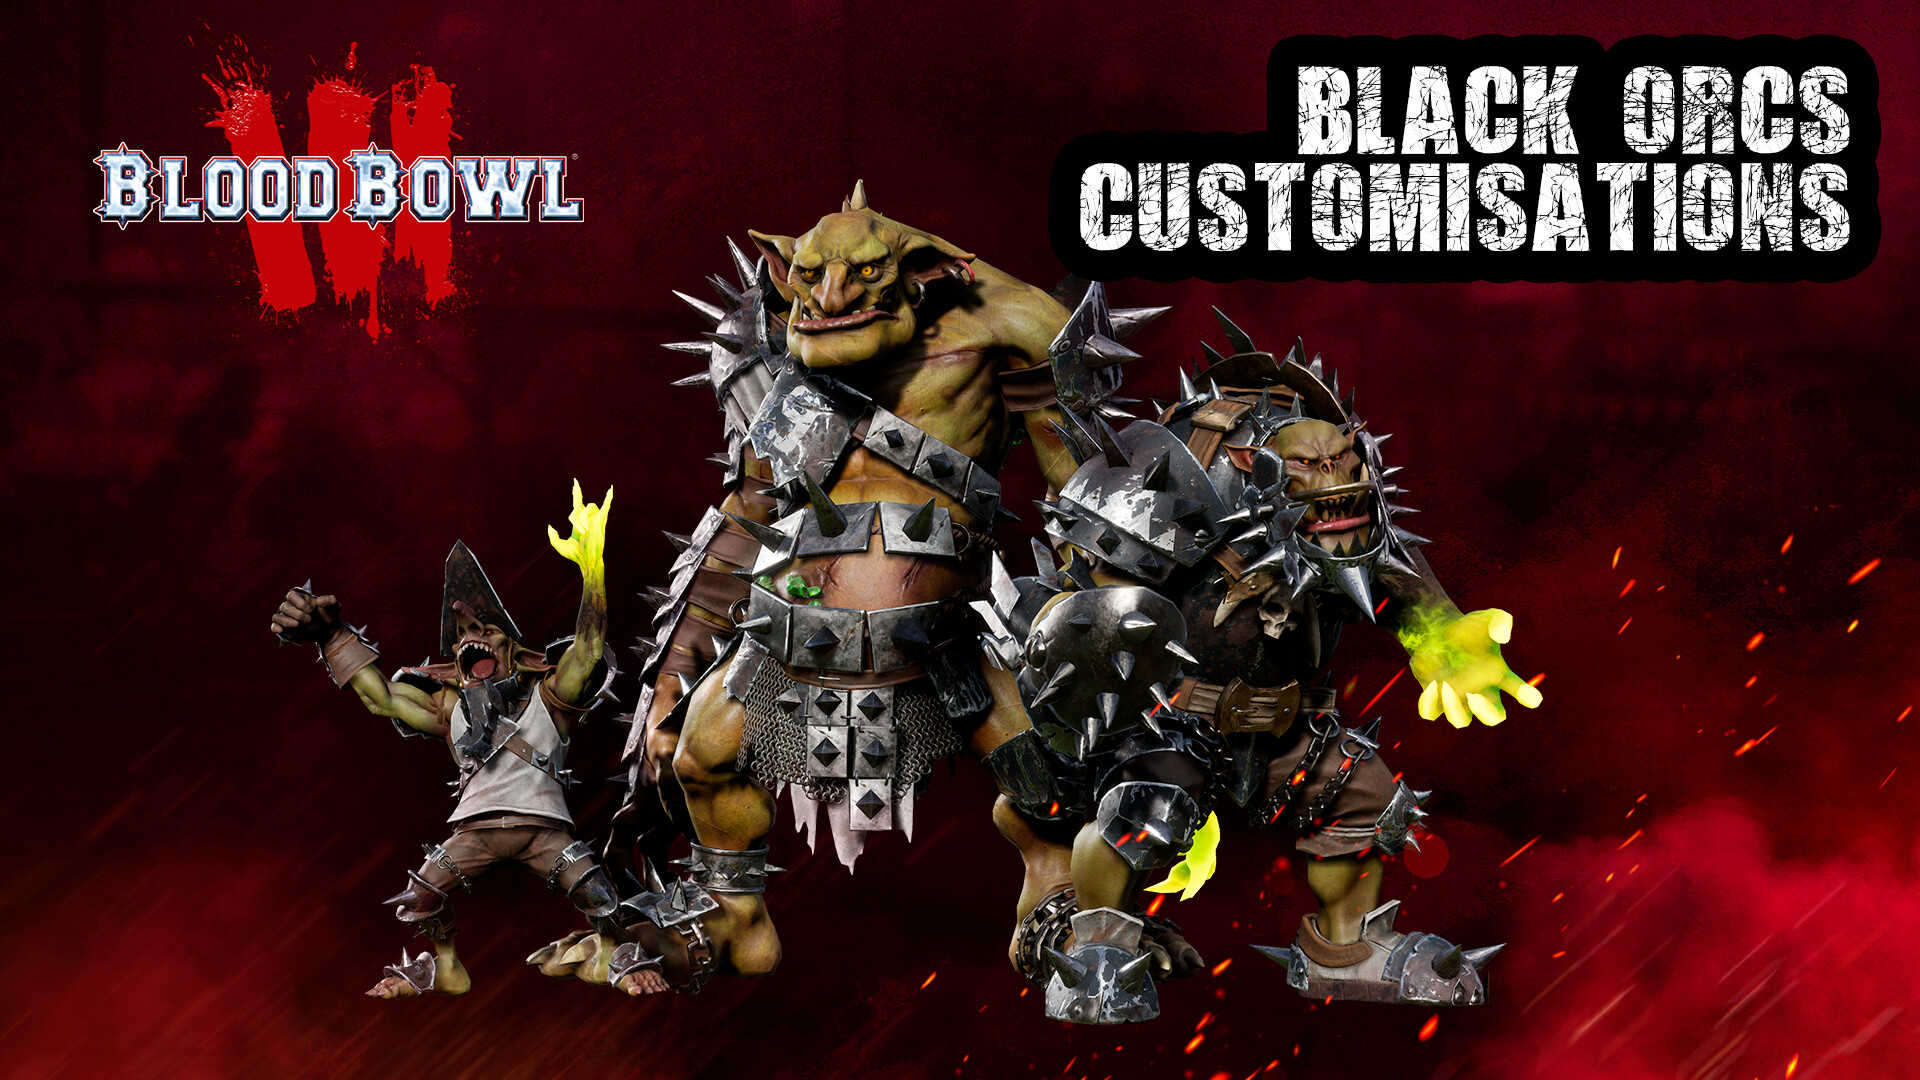 Blood Bowl 3 - Black Orcs Customizations DLC Steam CD Key, $3.82